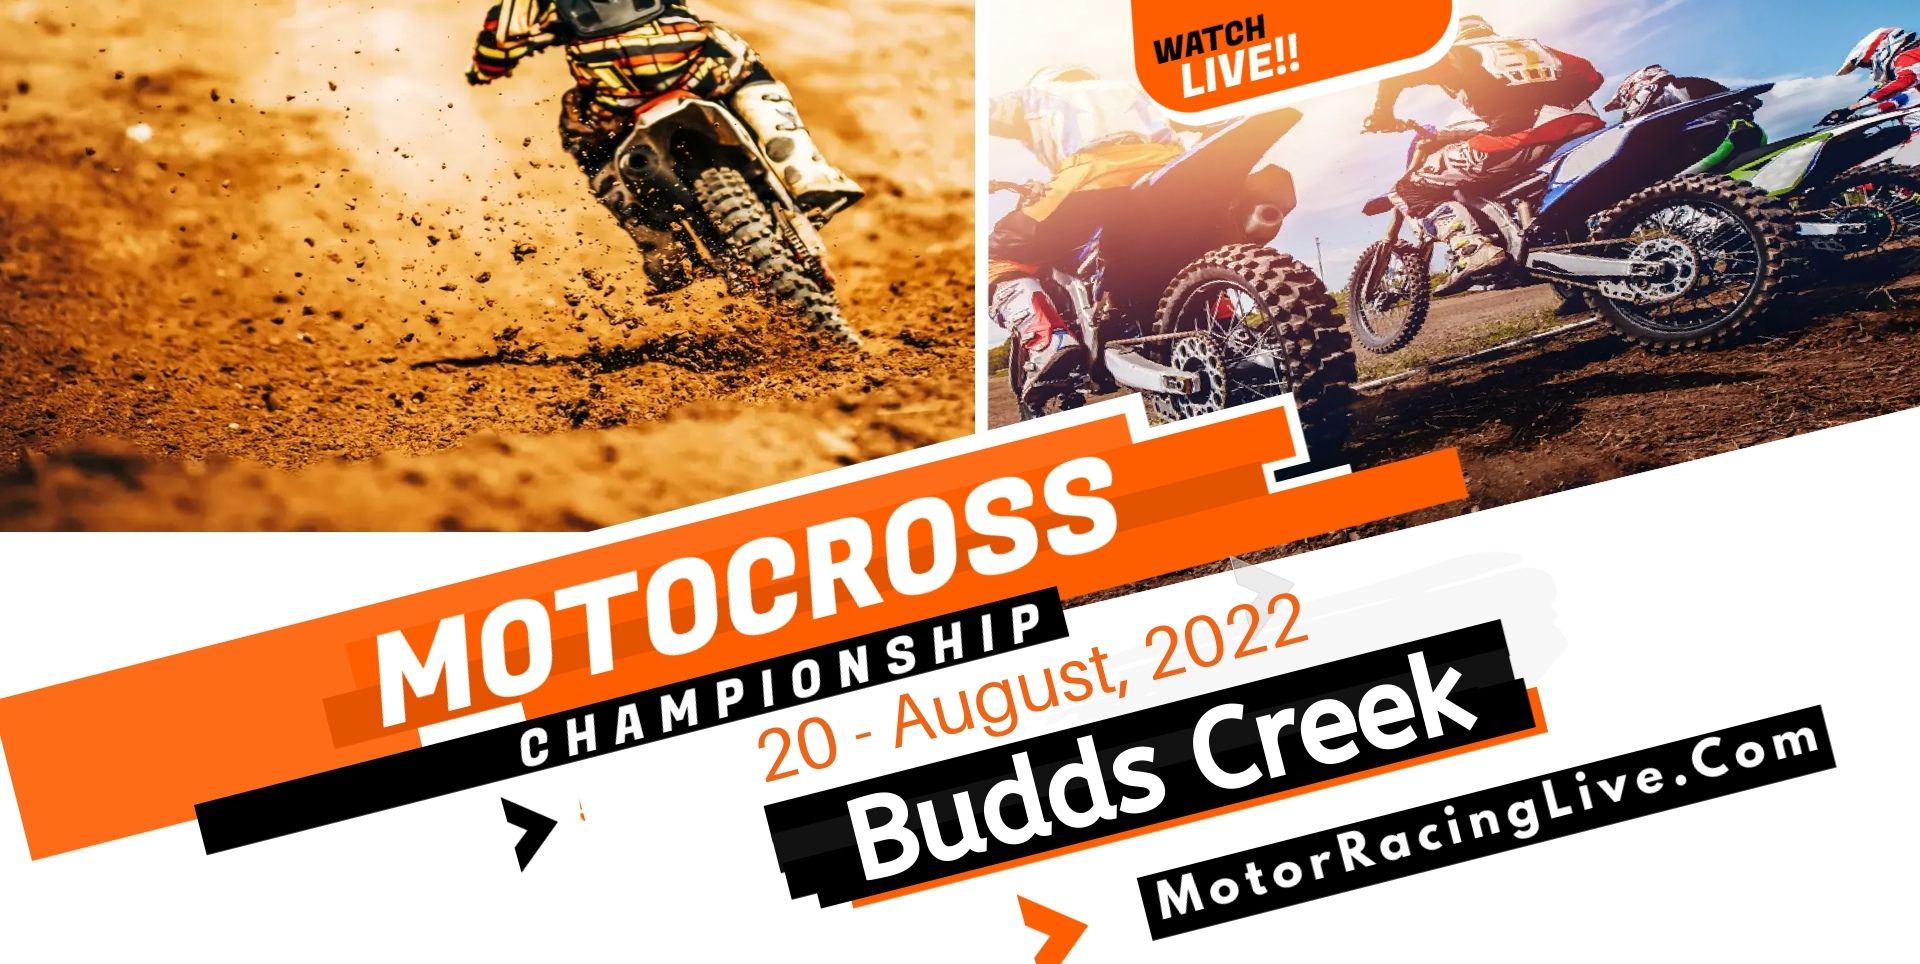 Budds Creek Live Stream 2022 | Motocross